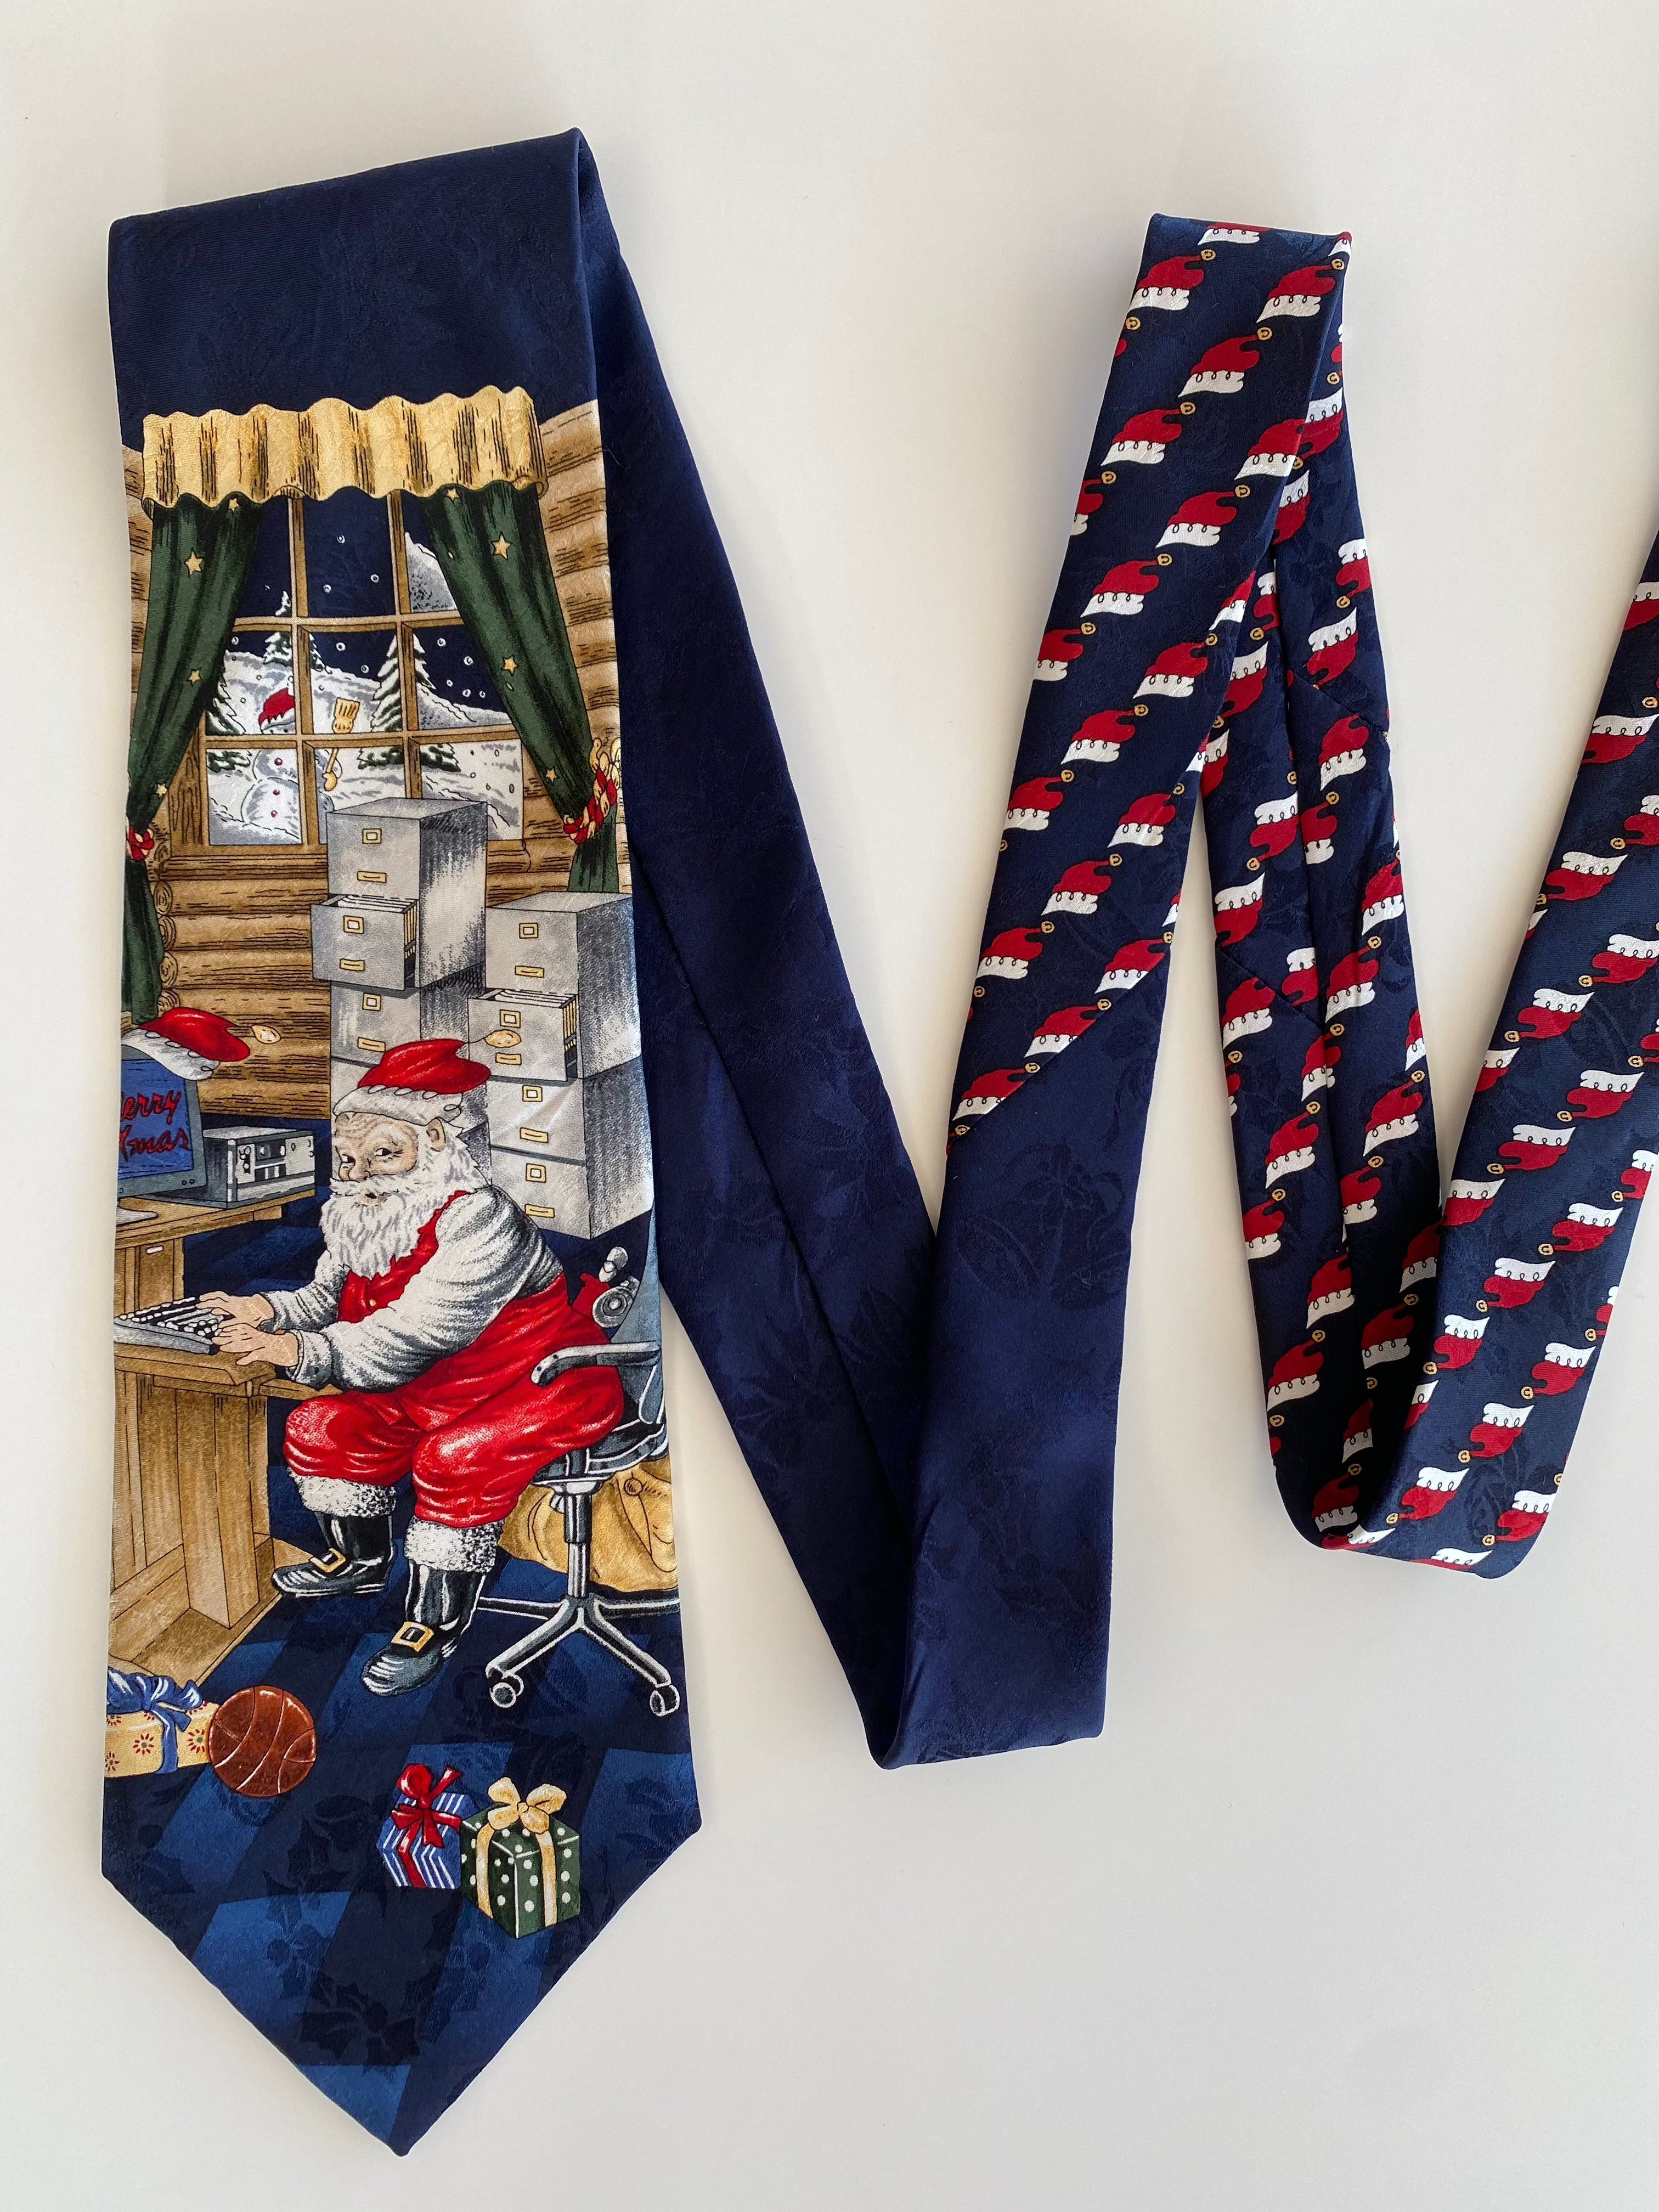 Vintage Christmas Tie - Balagan Vintage Ties 00s, 90s, Christmas, print, printed tie, ties, vintage, vintage tie